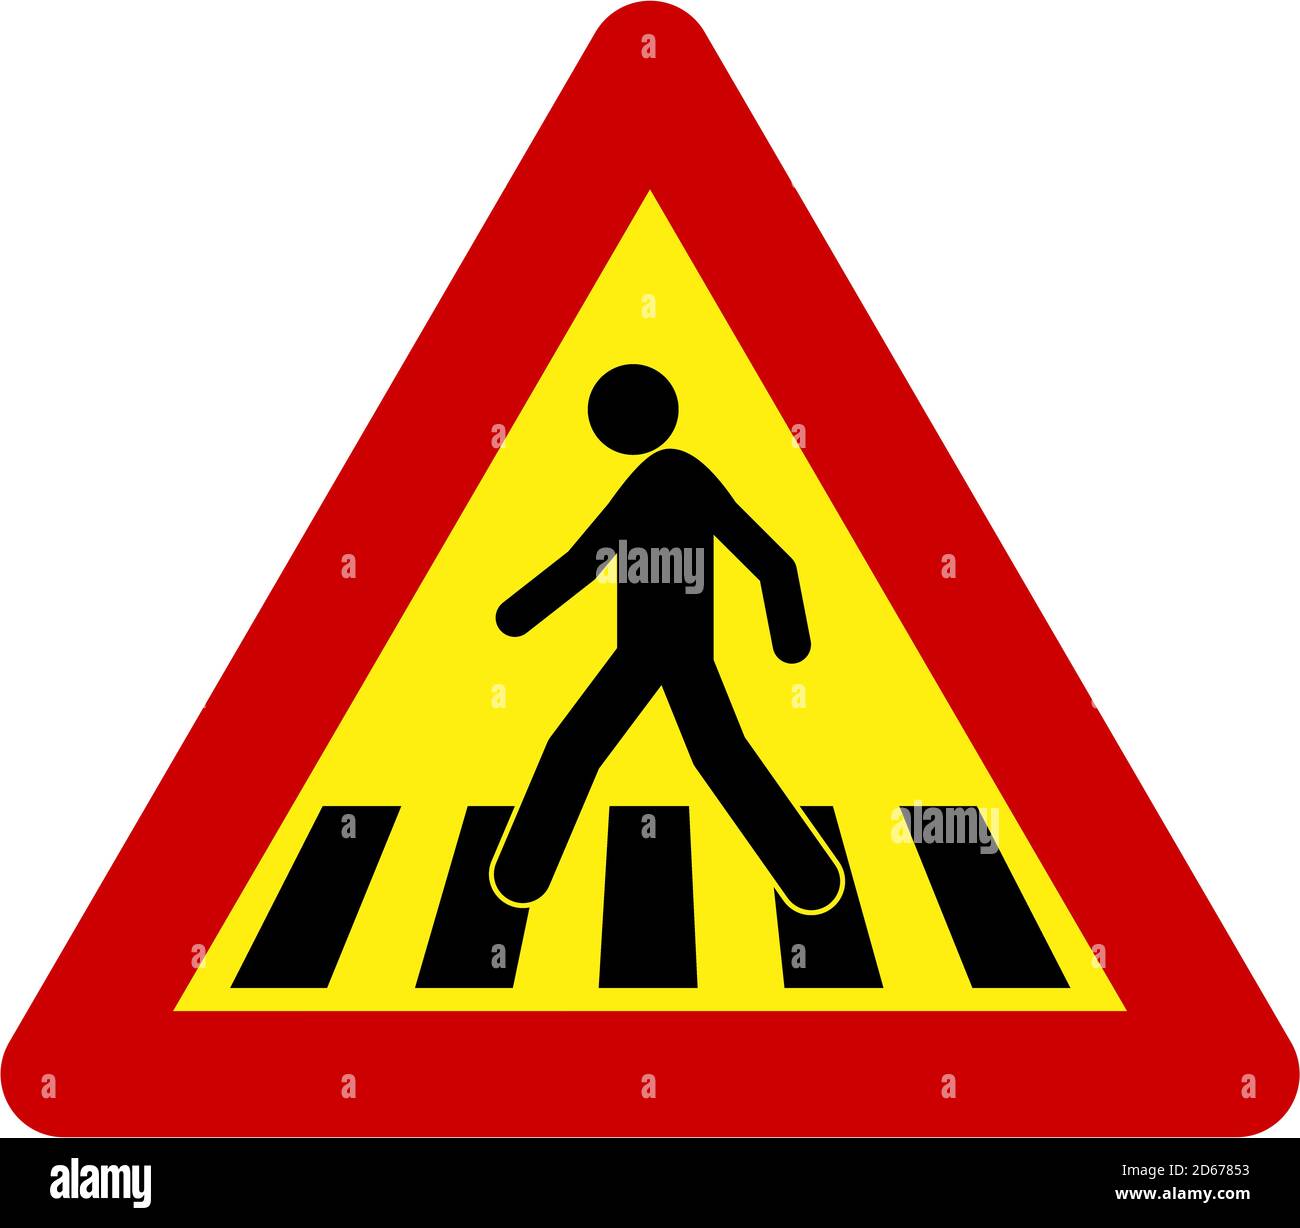 Warning sign with crosswalk symbol Stock Photo